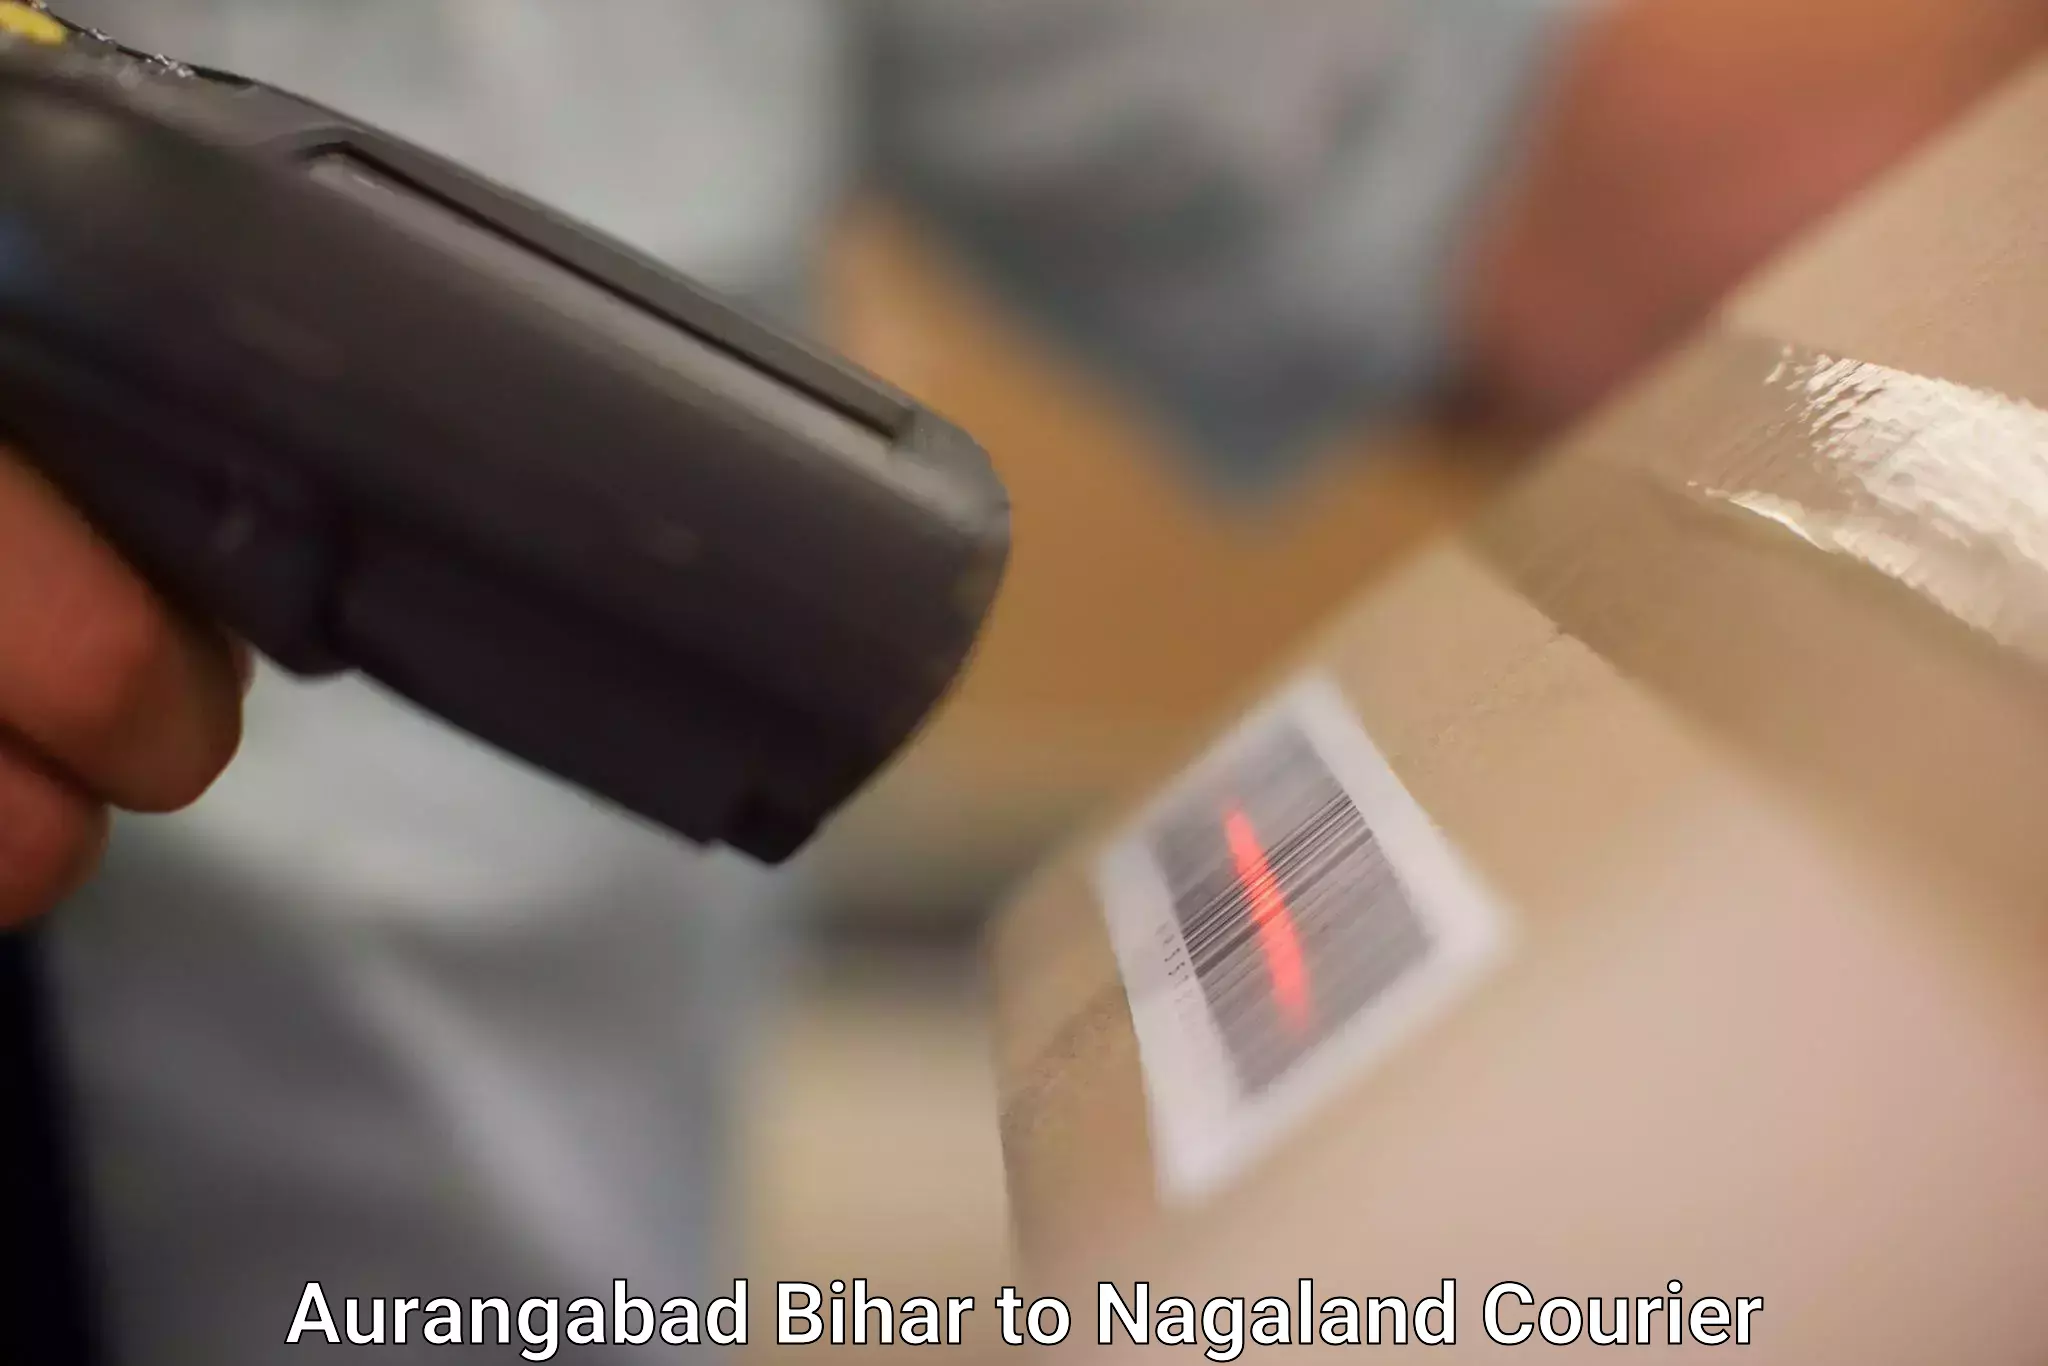 On-call courier service Aurangabad Bihar to Mon